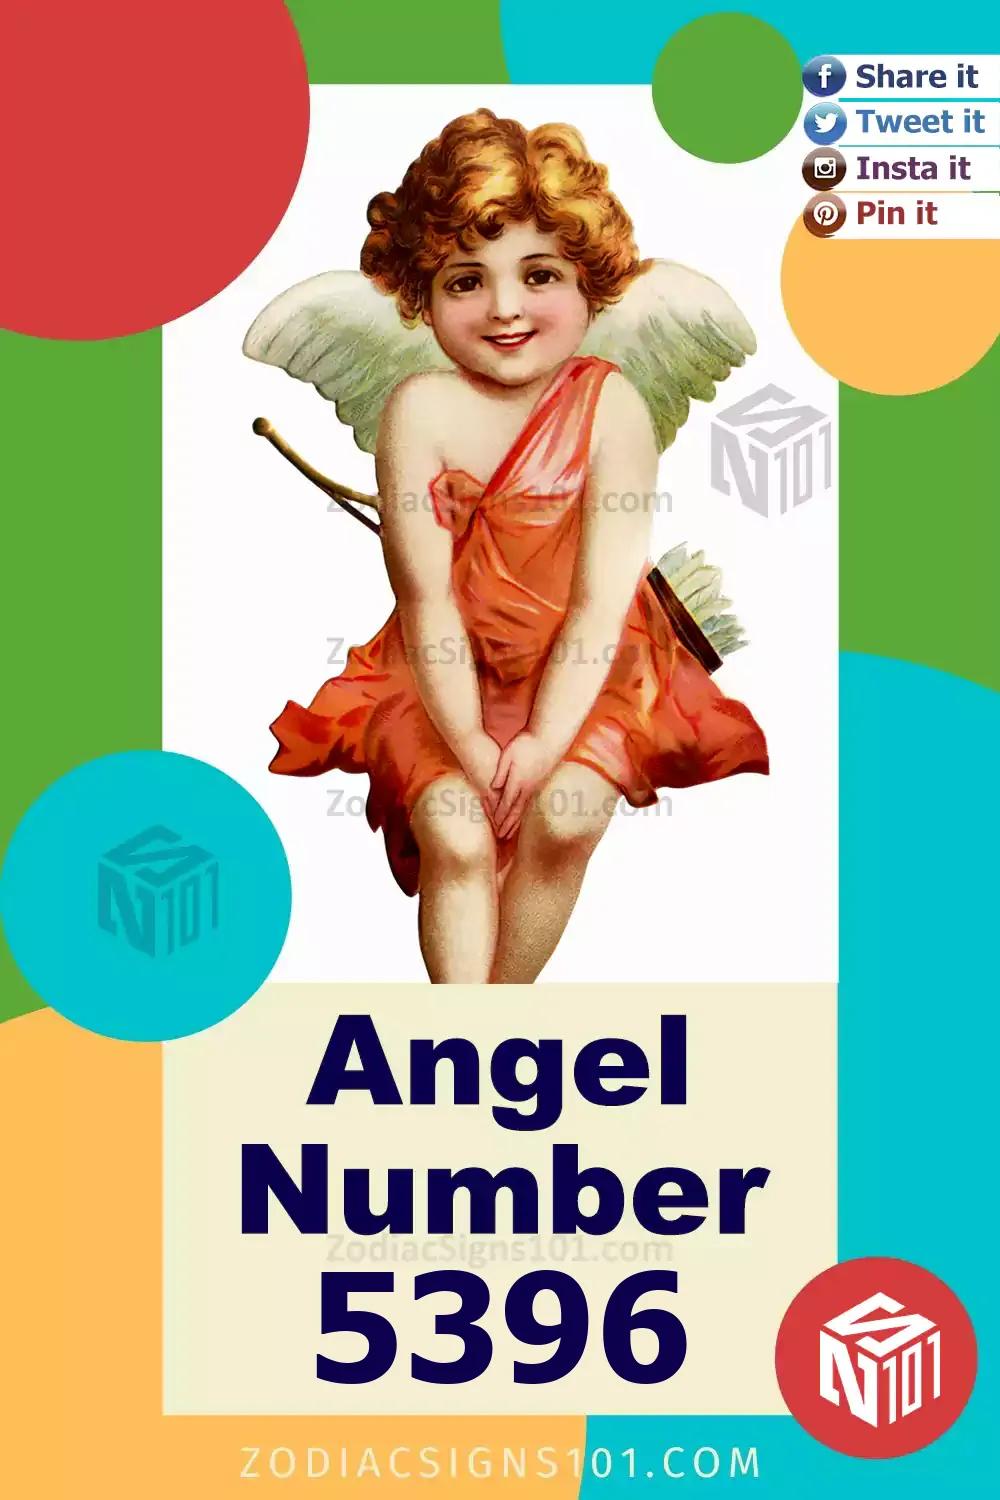 5396-Angel-Number-Meaning.jpg